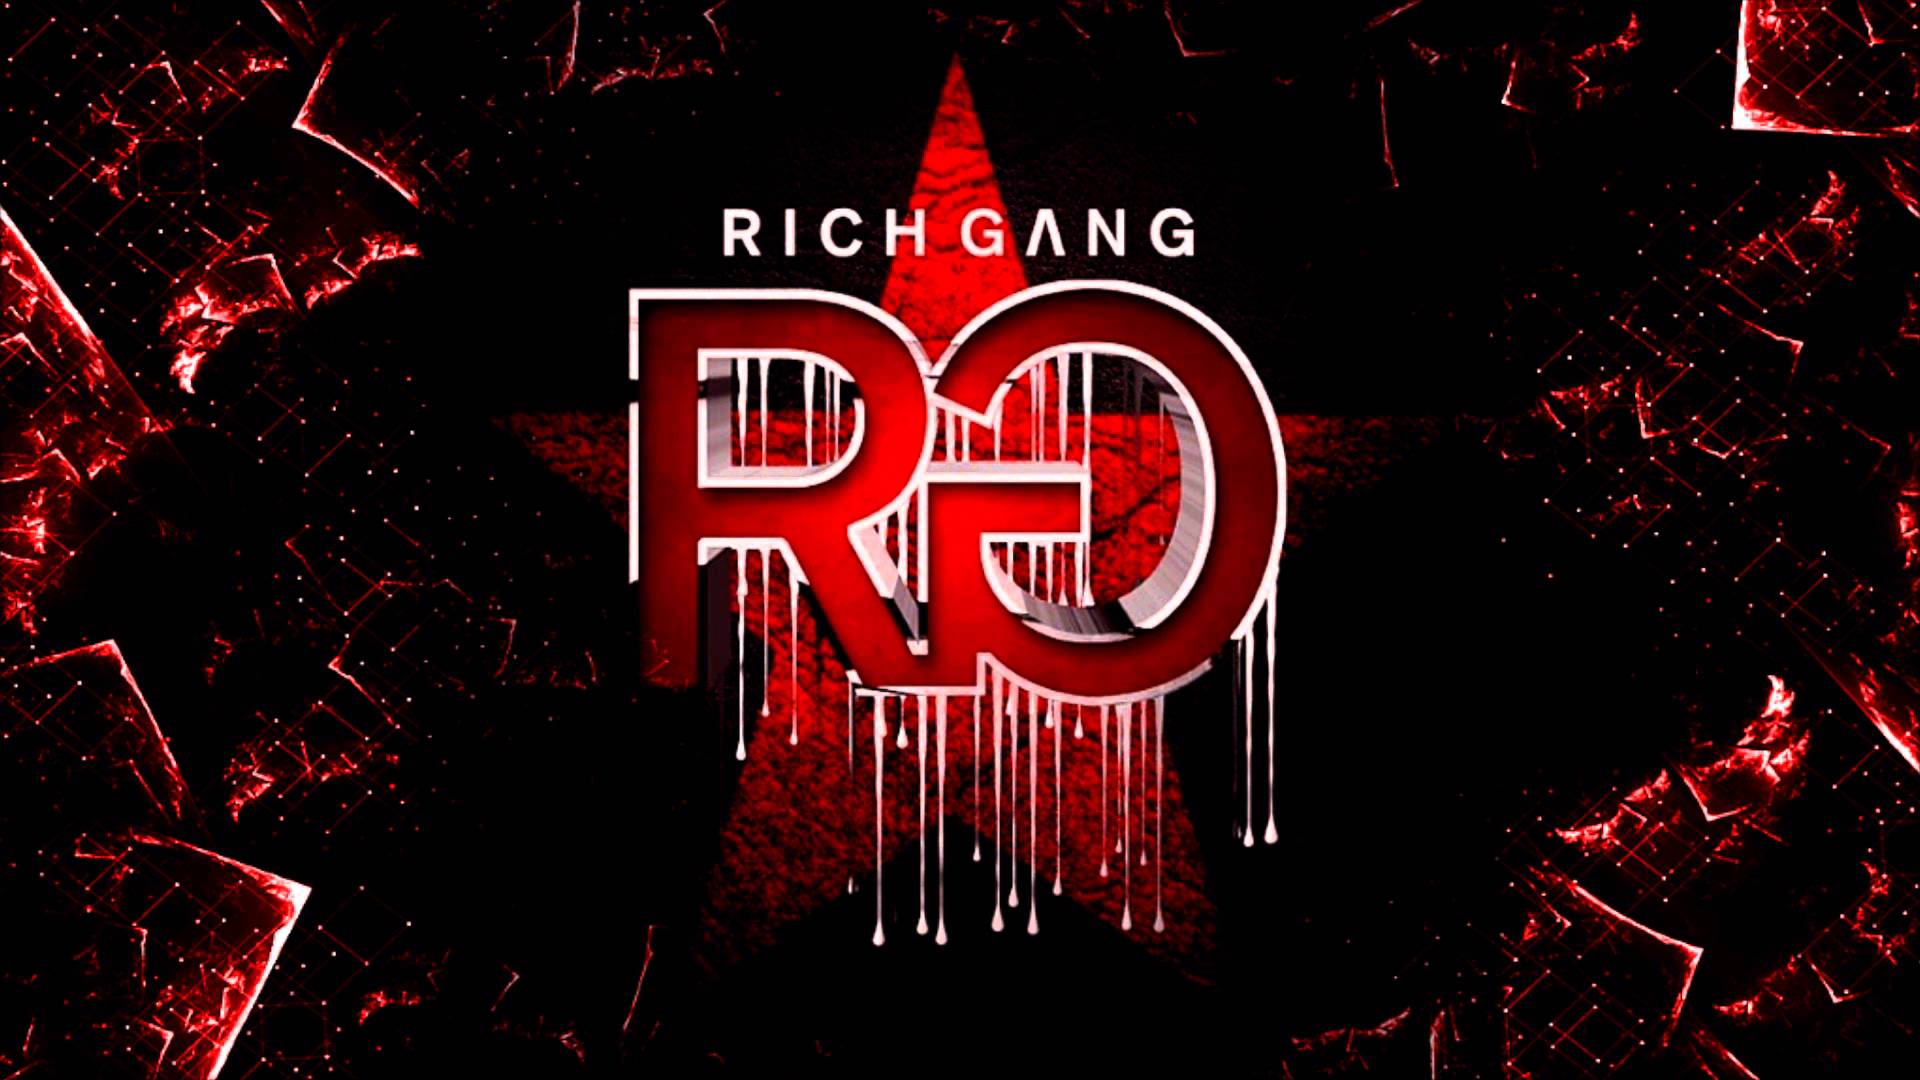 Rich Gang Logo Wallpaper Rich gang album cover